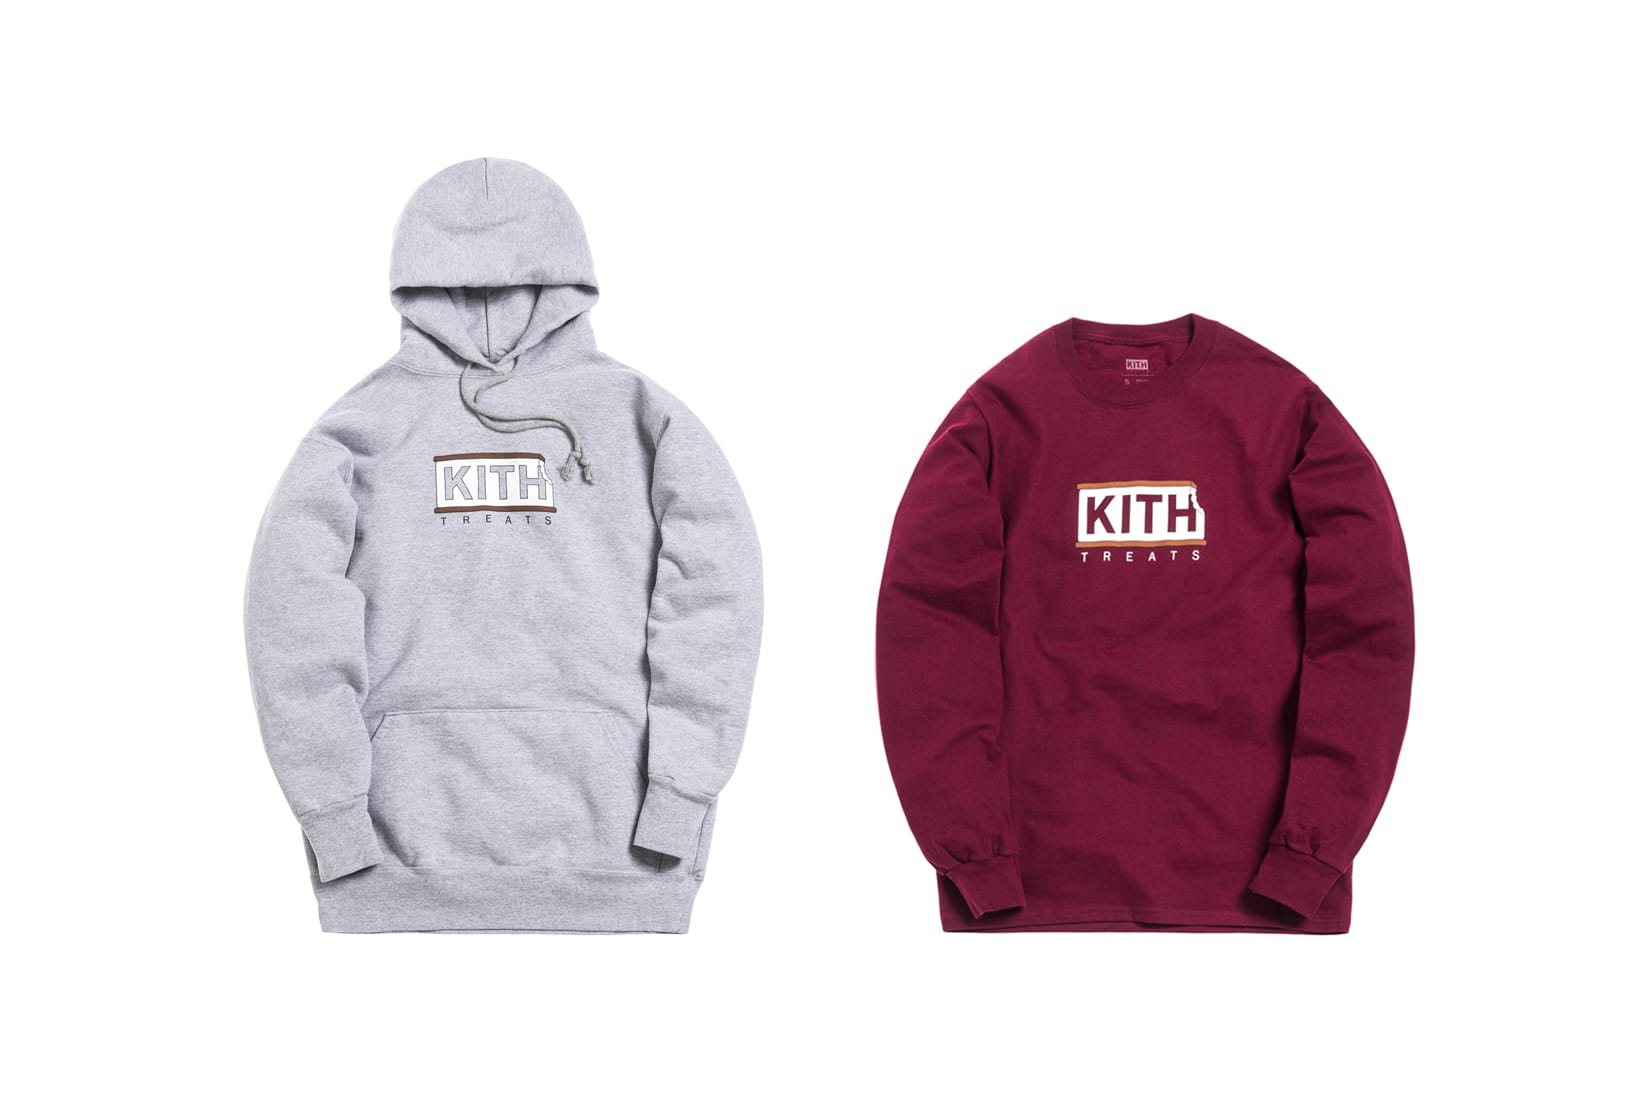 KITH Treats Releases New Hoodies & Sweatshirts | HYPEBAE